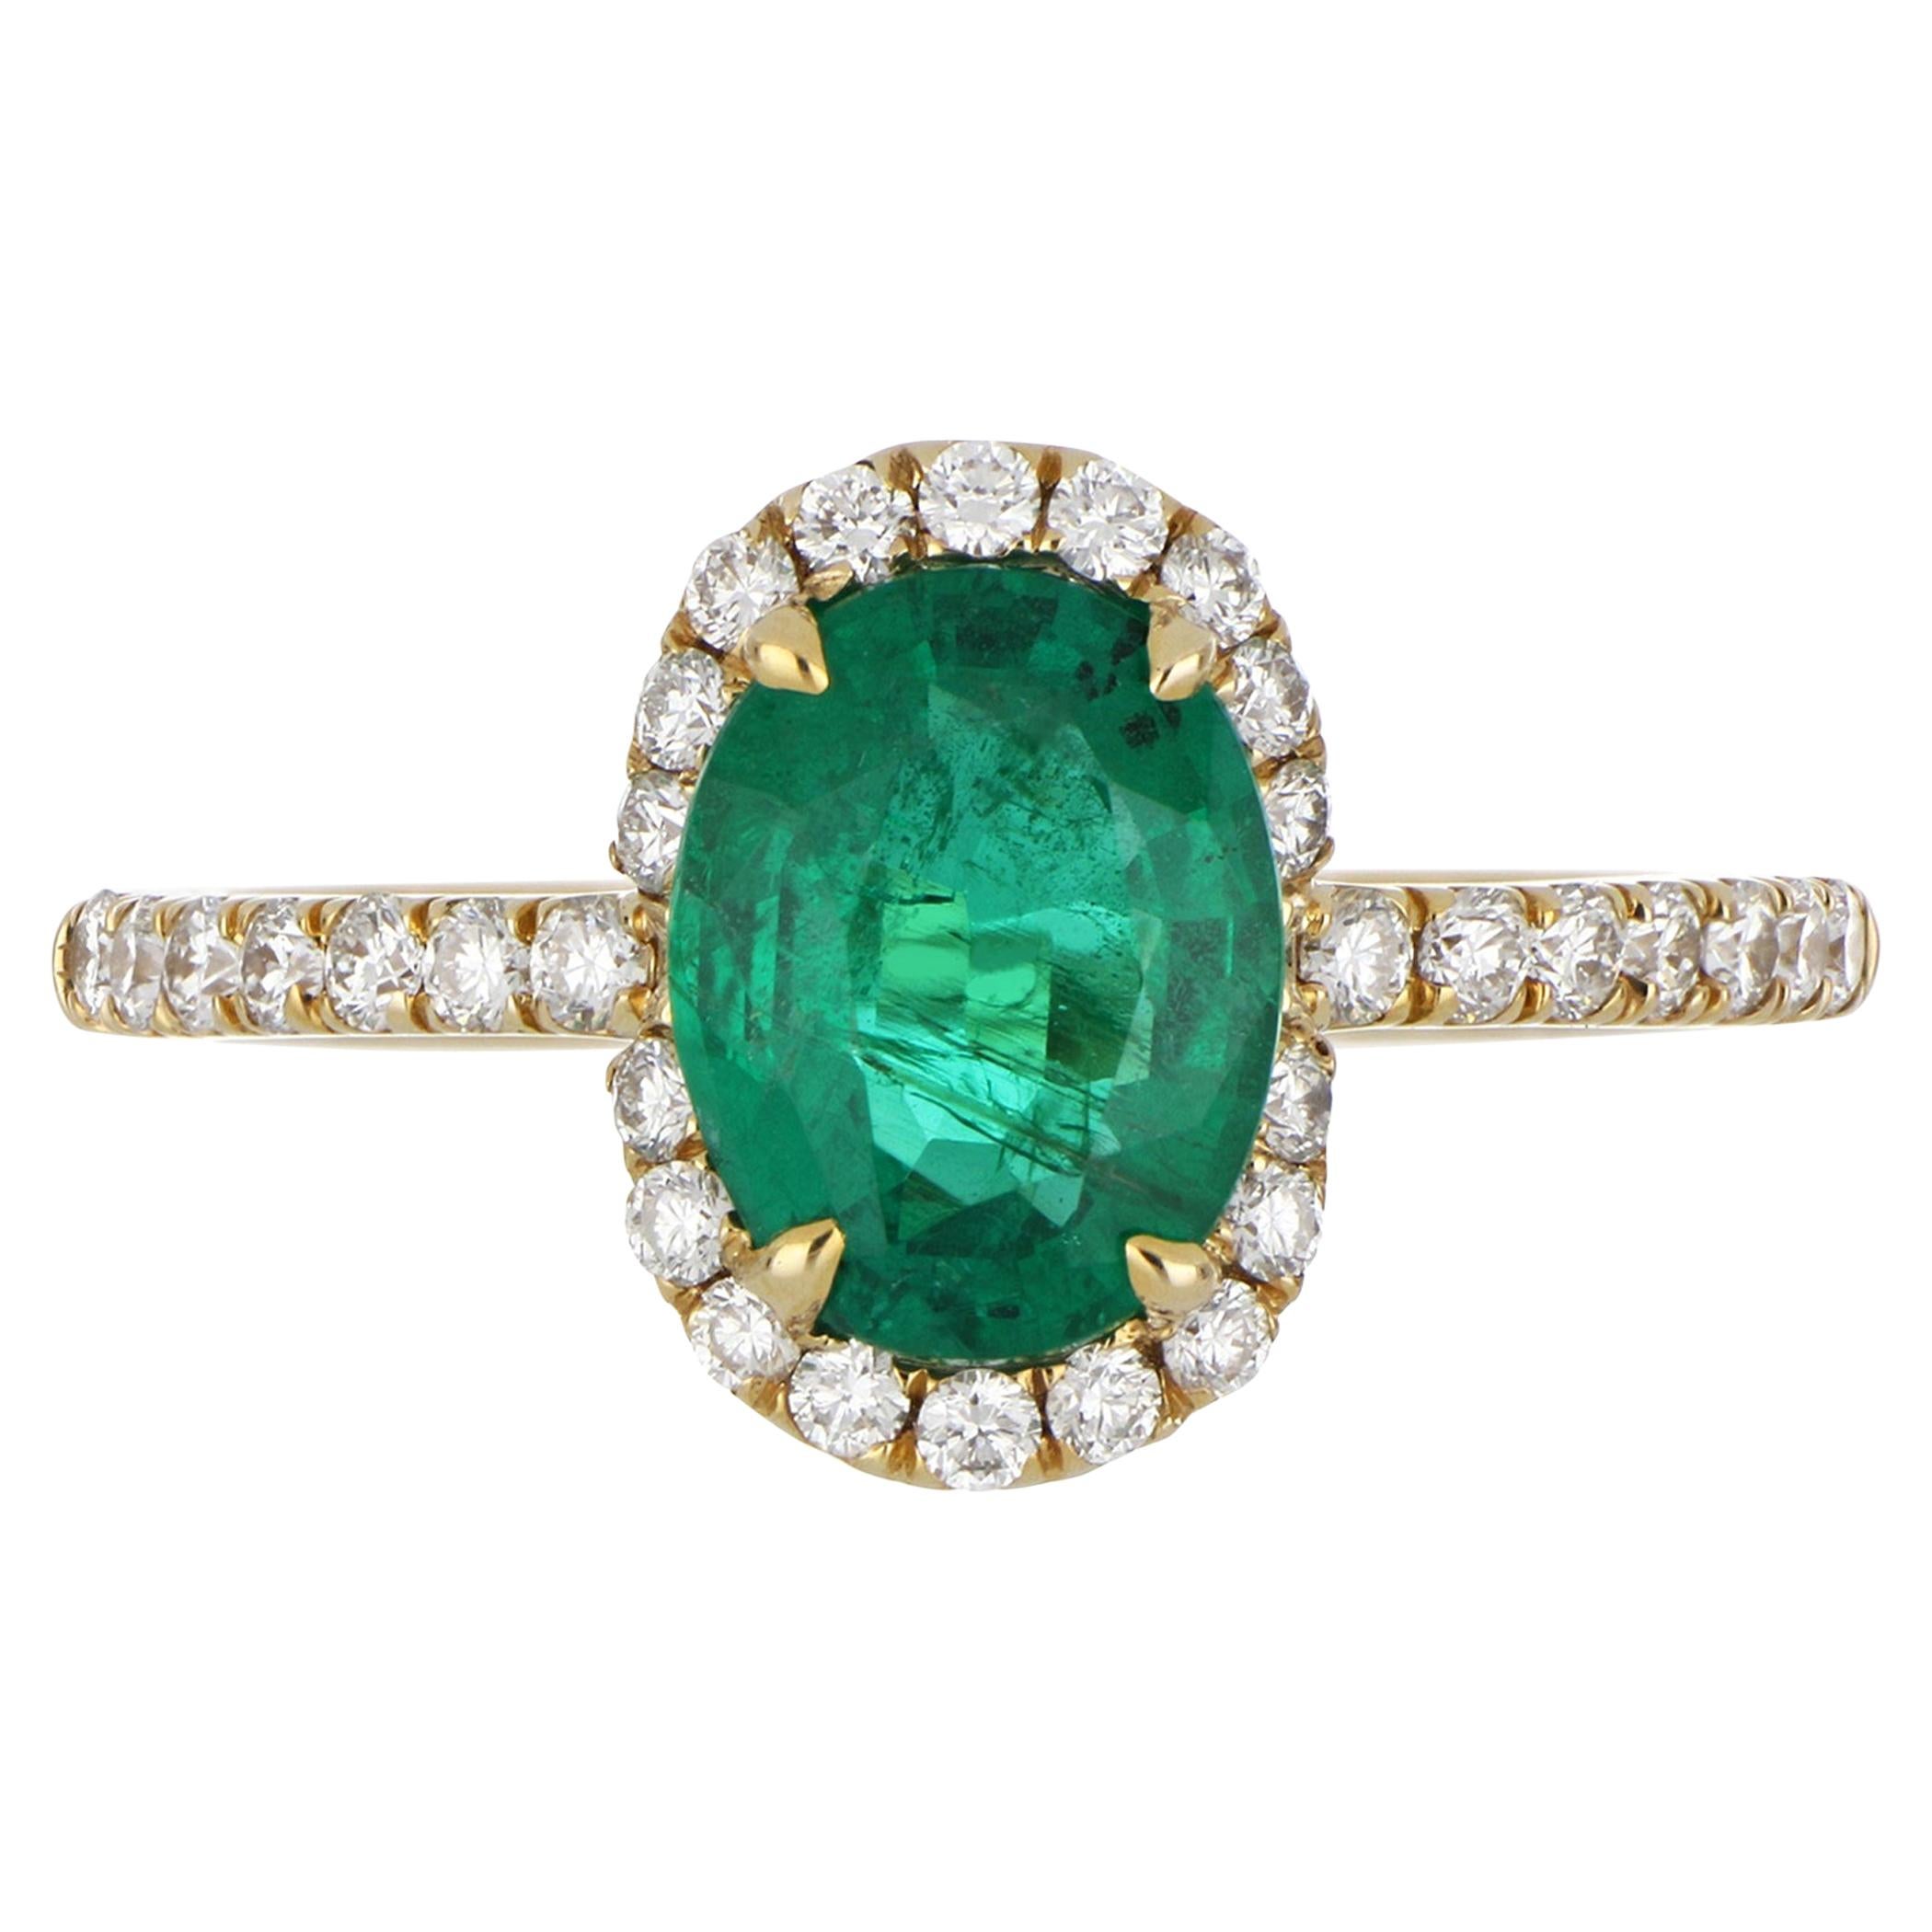 1.73 Carat Emerald Ring with Diamonds in 14 Karat Yellow Gold